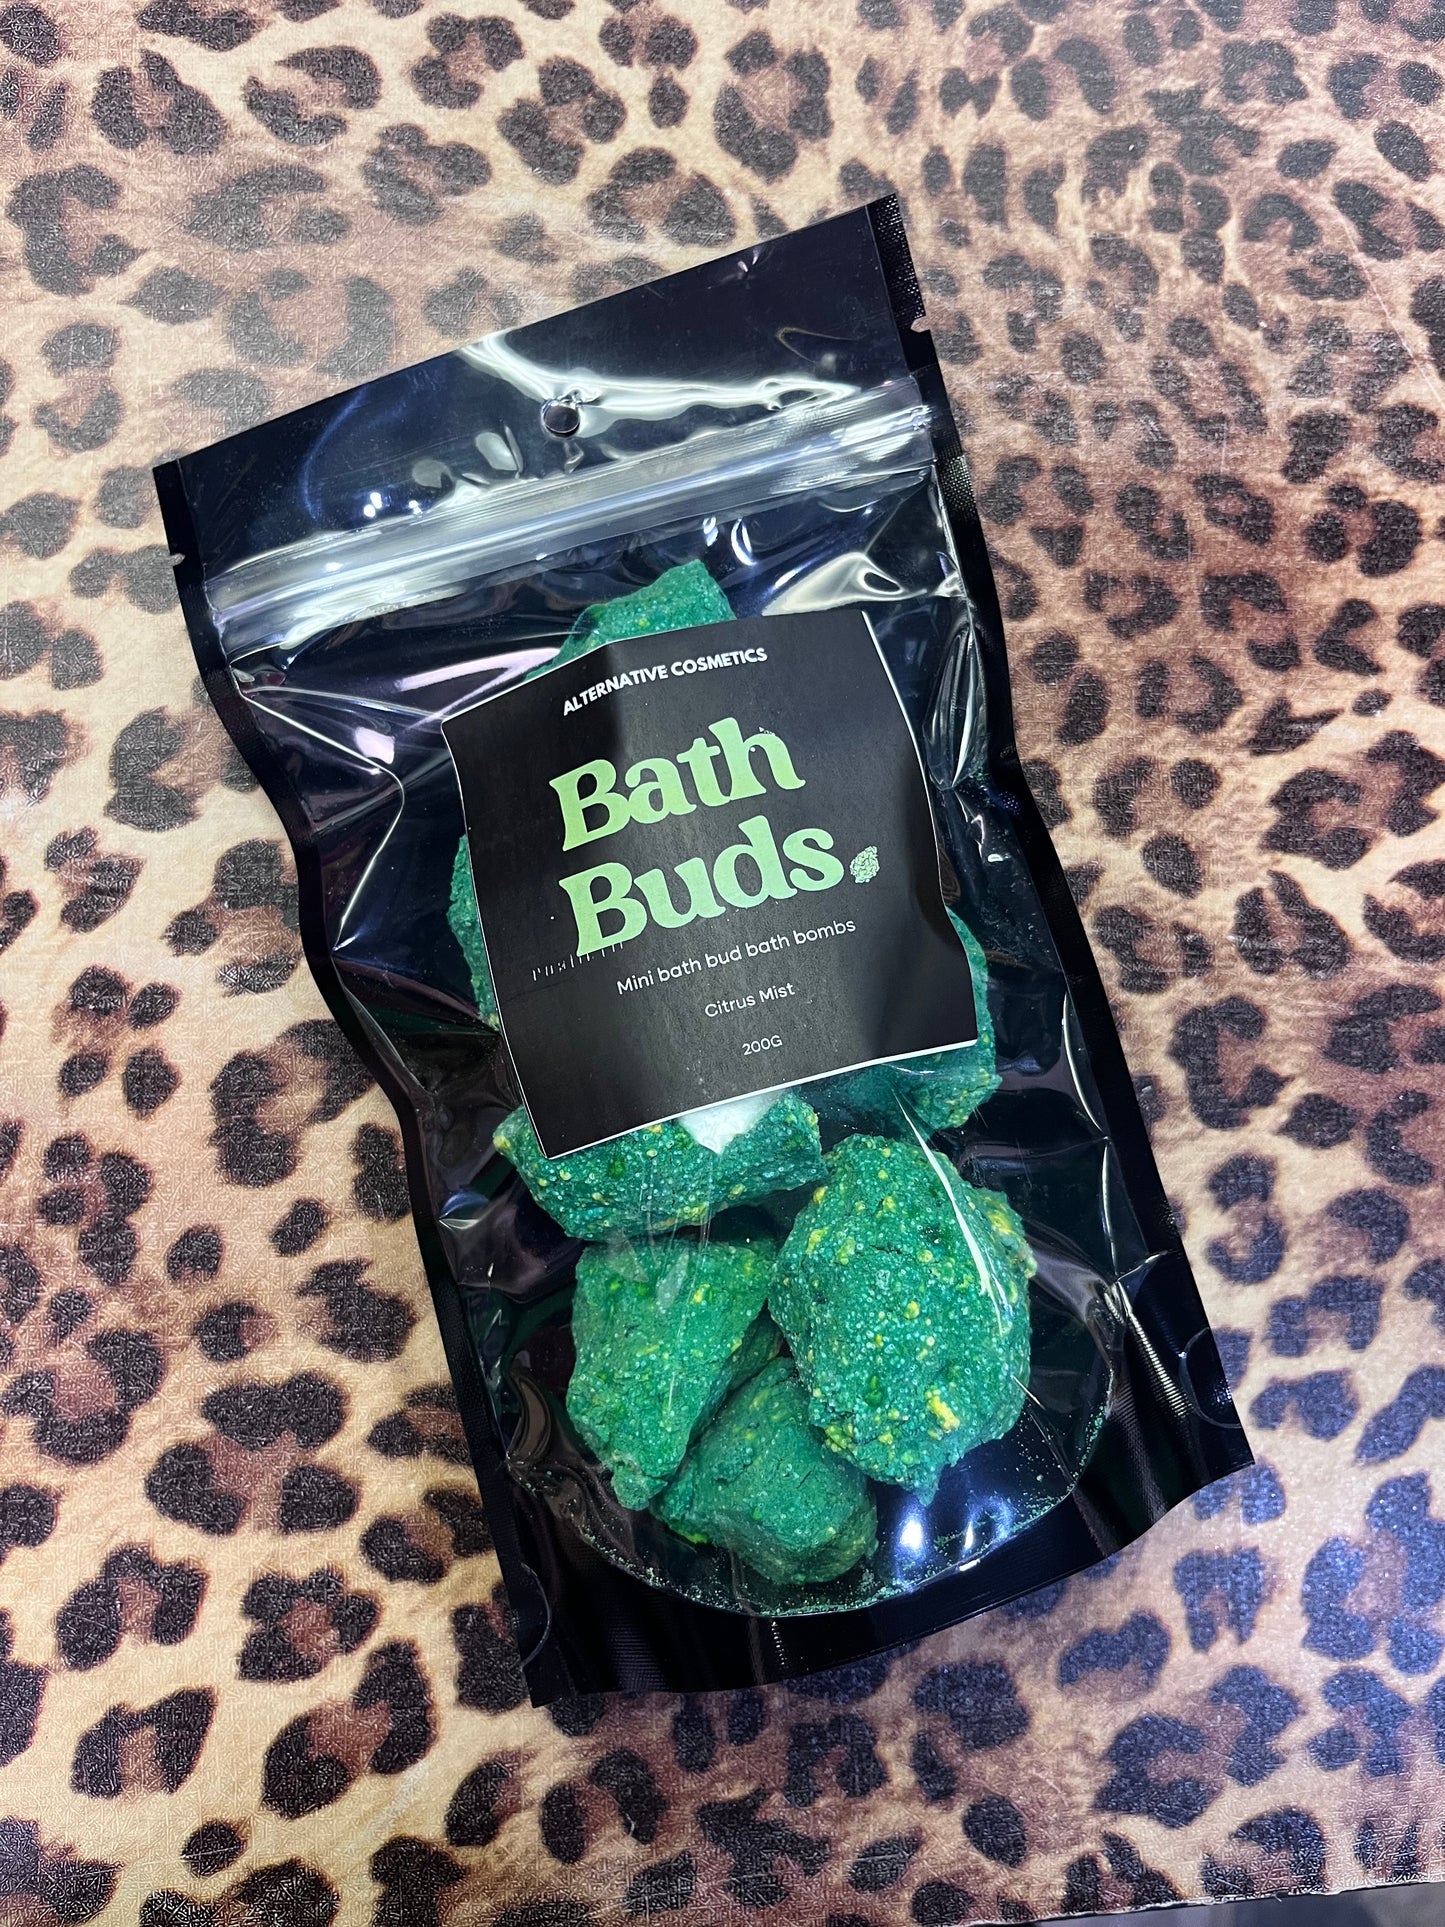 Bath Buds Bath Bombs